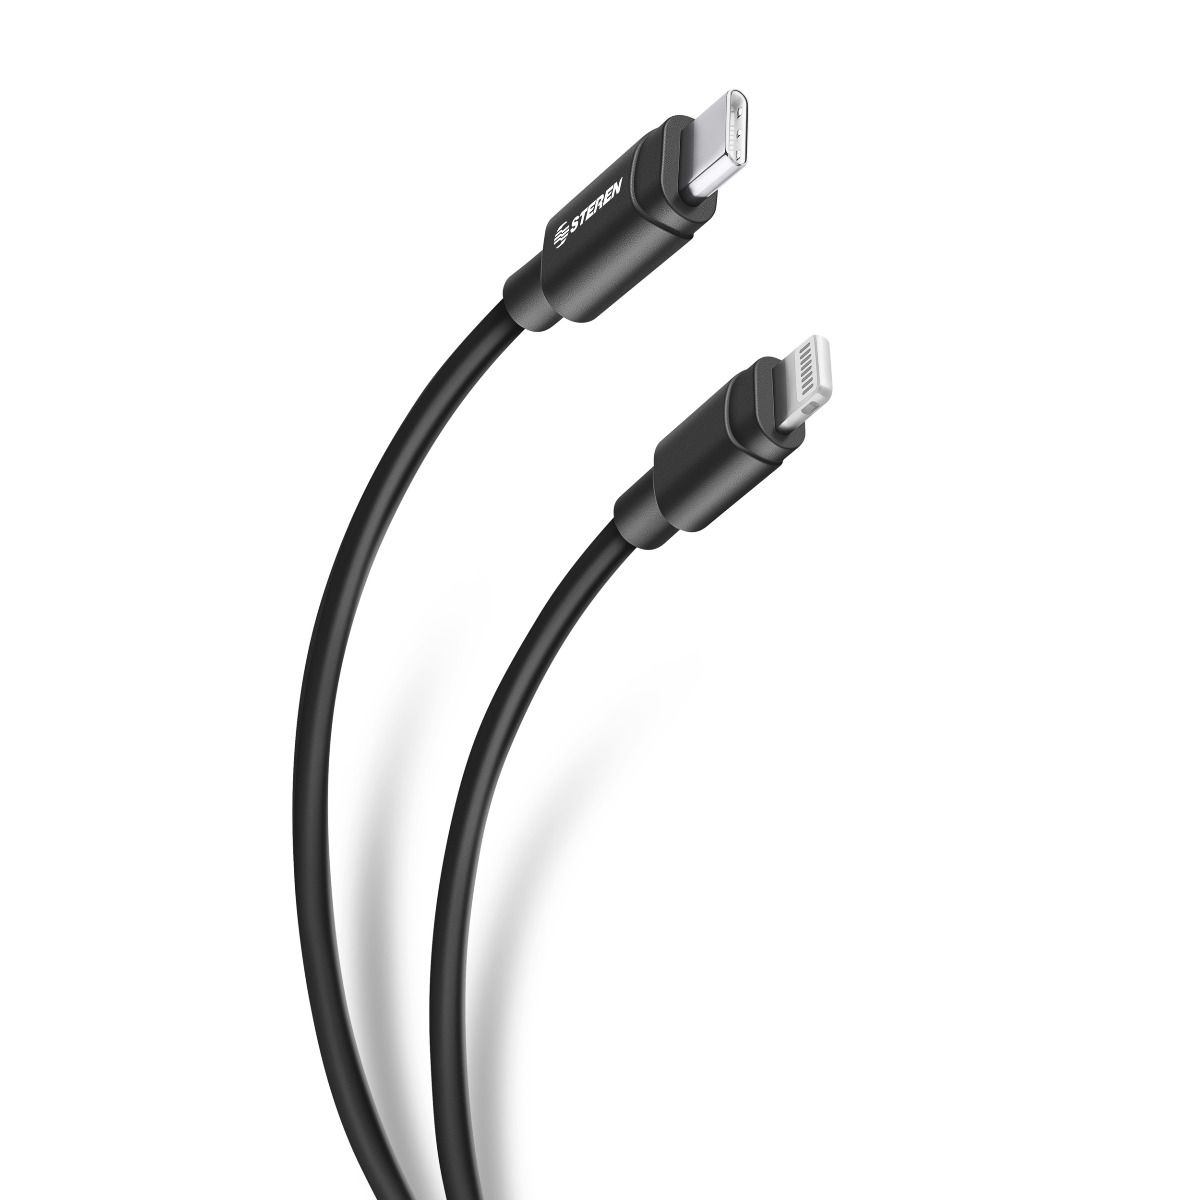 Cable Cargador Tipo C para Iphone - USB-C to Lighting - 